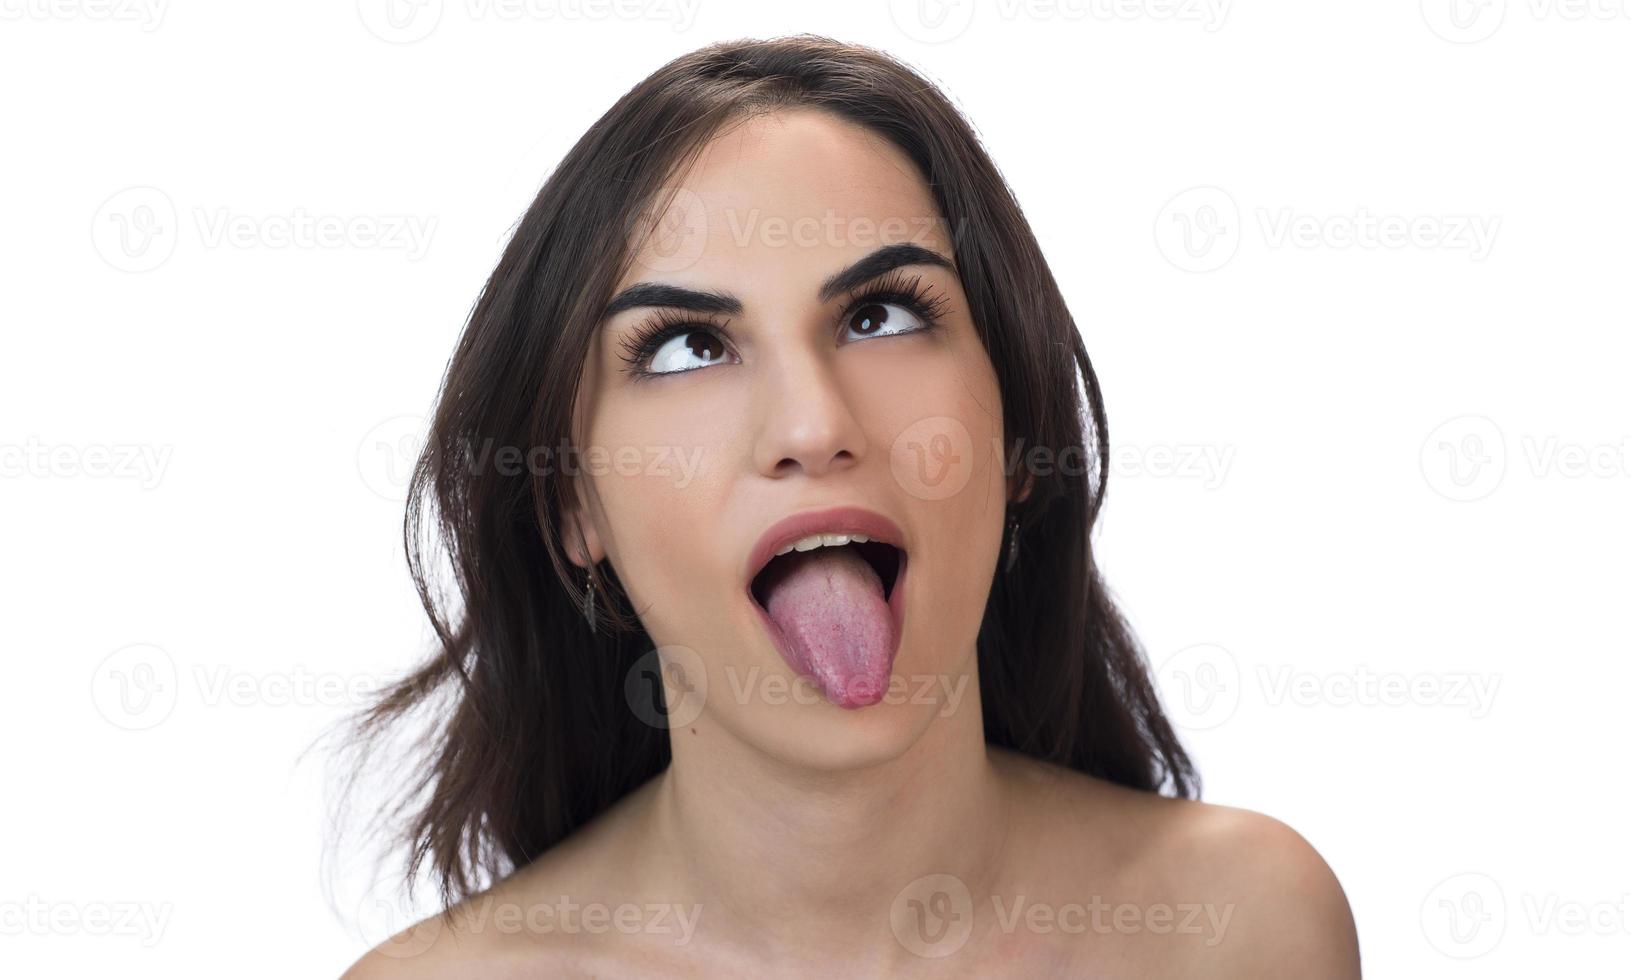 mujer de ojos entrecerrados con expresión extraña aislada en blanco foto